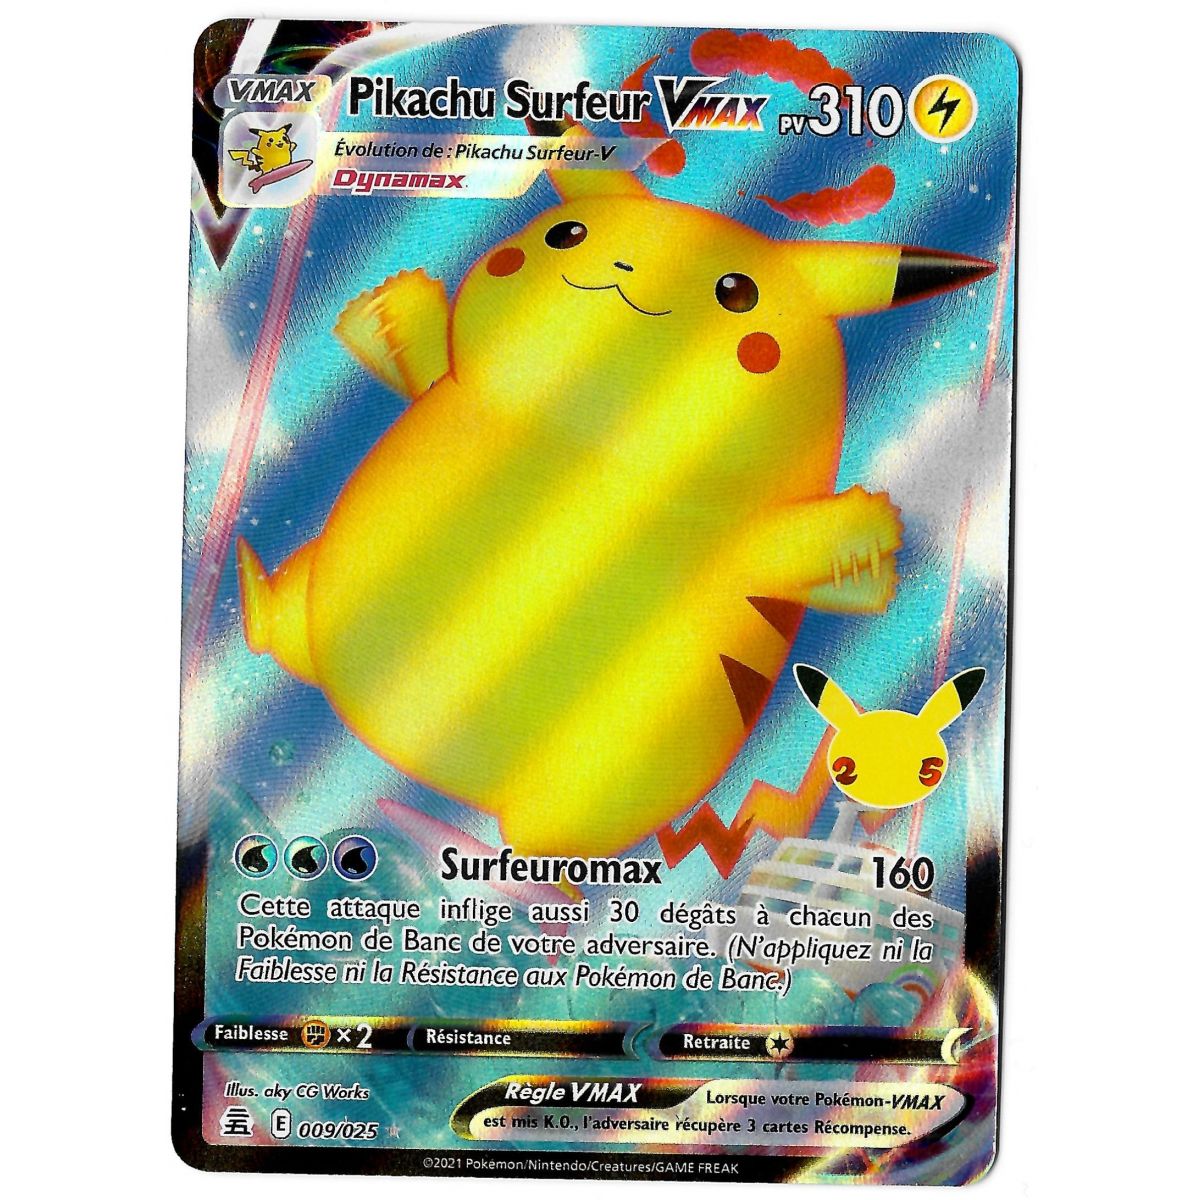 Pikachu Surfeur VMAX - Full Art Ultra Rare 009/025 EB07.5 Célébrations 25 Ans